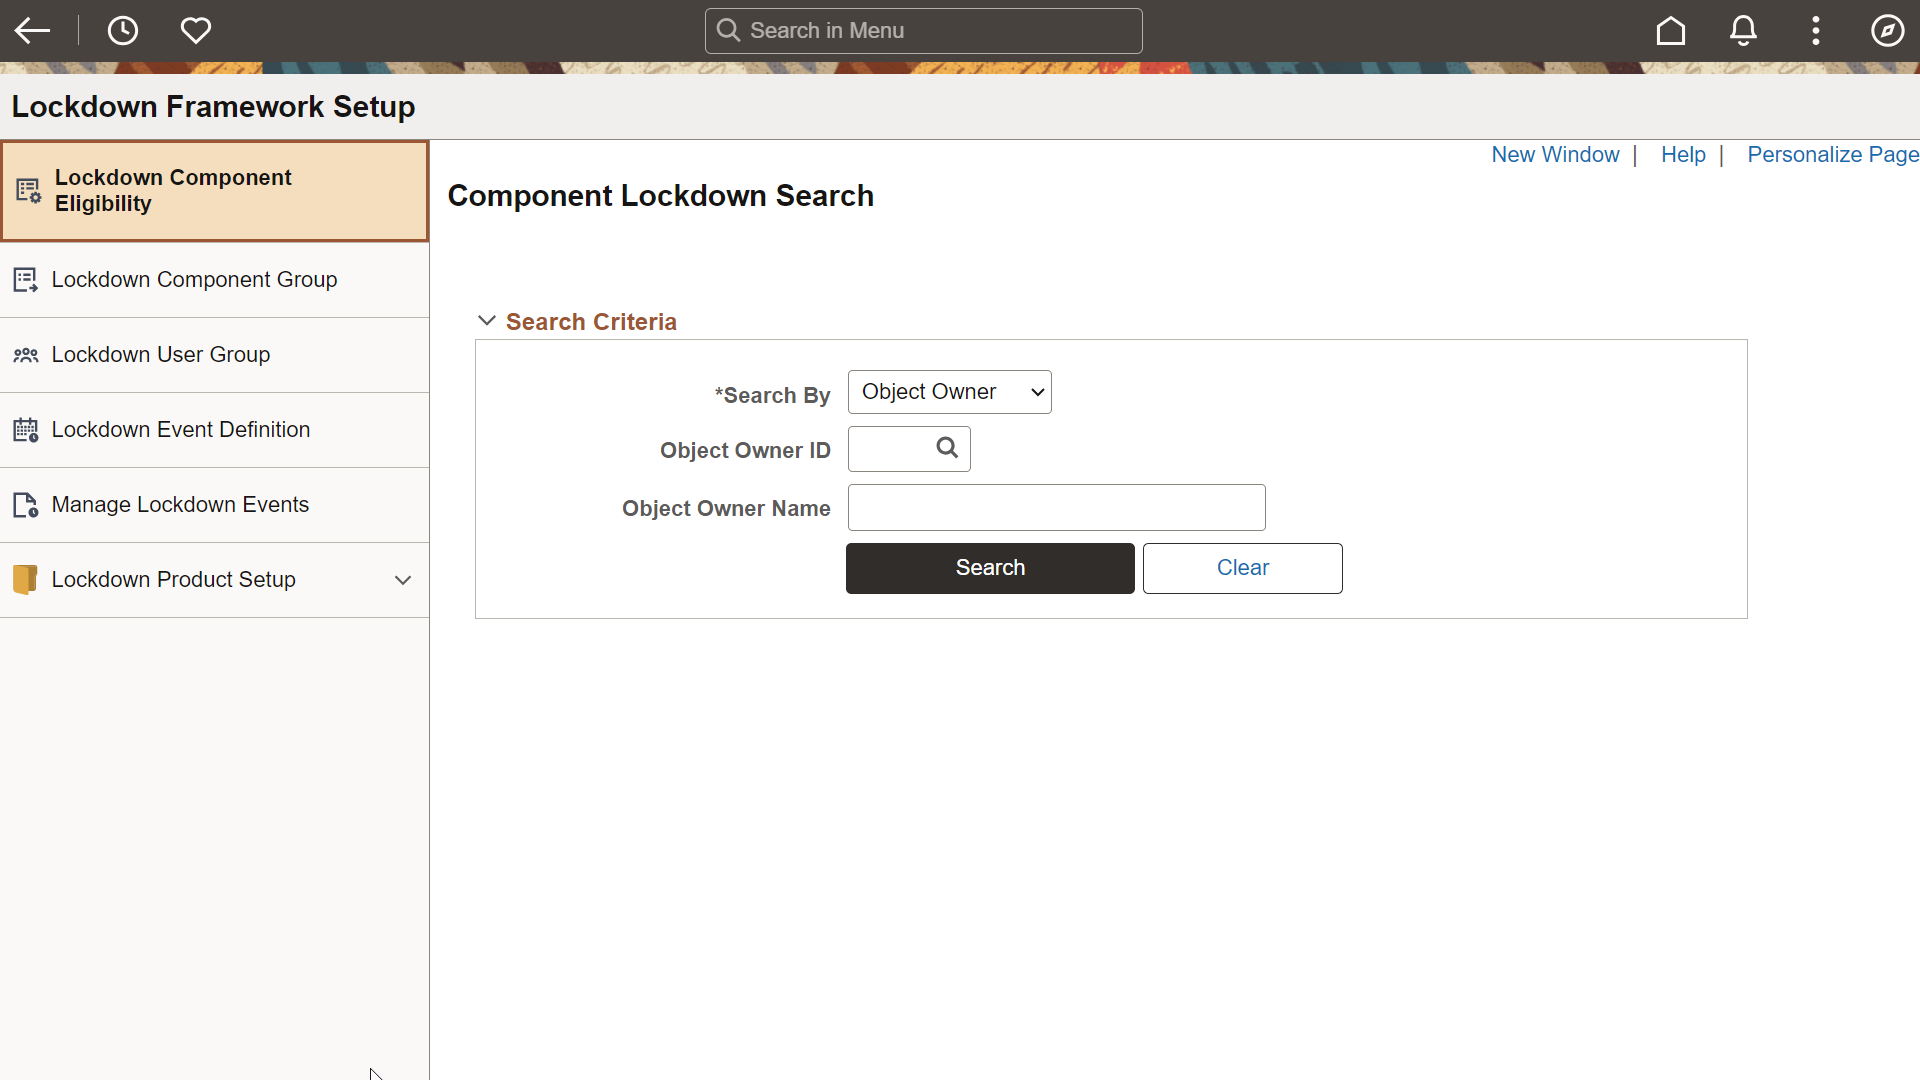 Component Lockdown Search